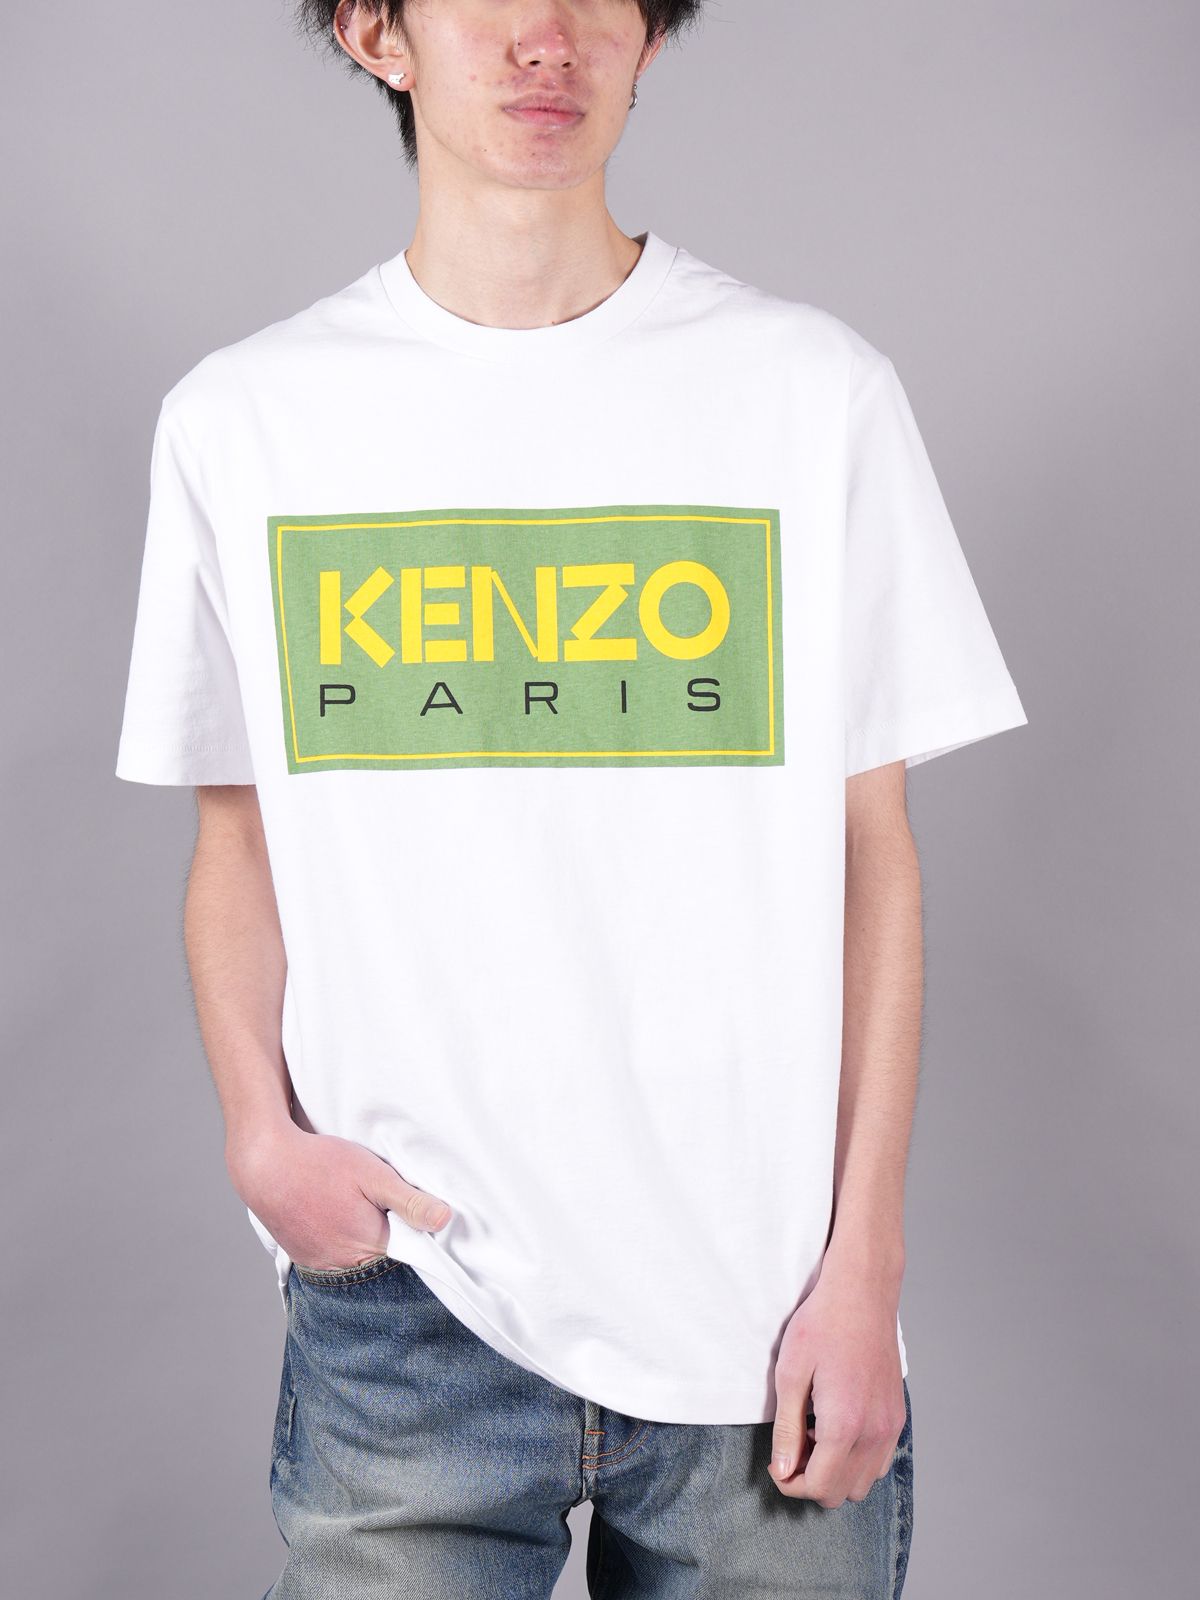 KENZO - Tricolor Kenzo Paris Tee / ケンゾー パリ クラシック T ...